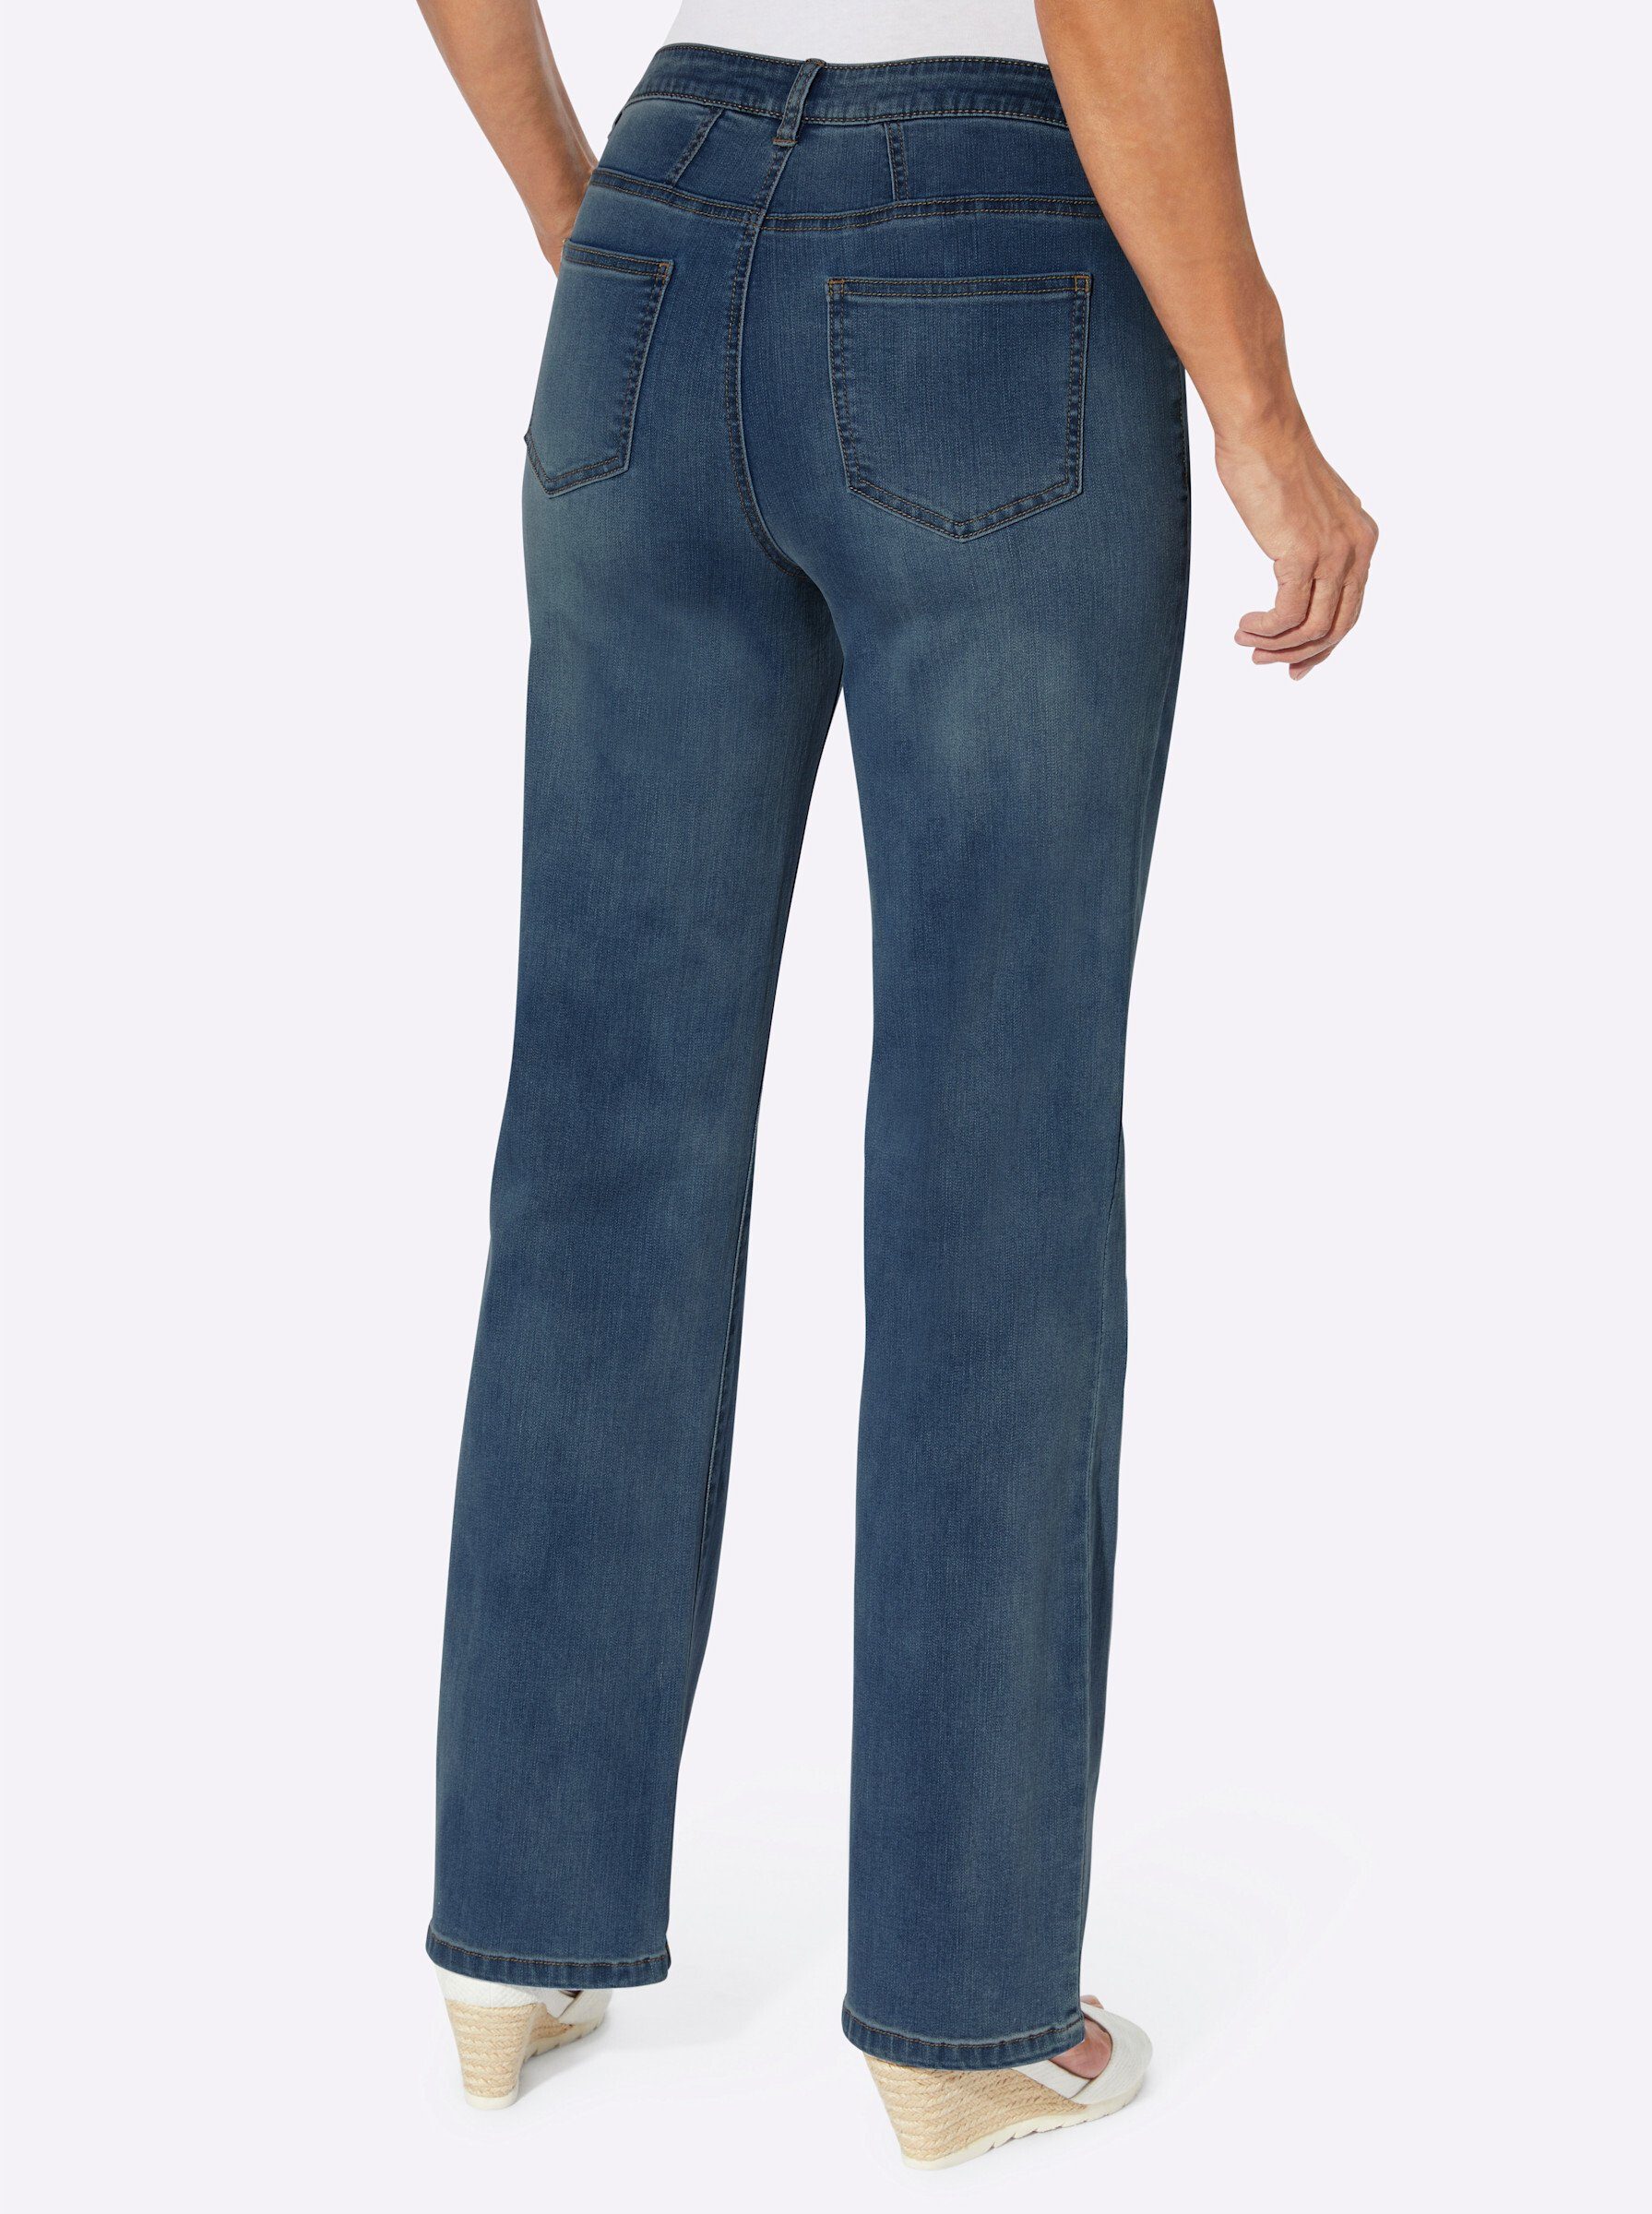 WITT WEIDEN Bequeme Jeans blue-stone-washed